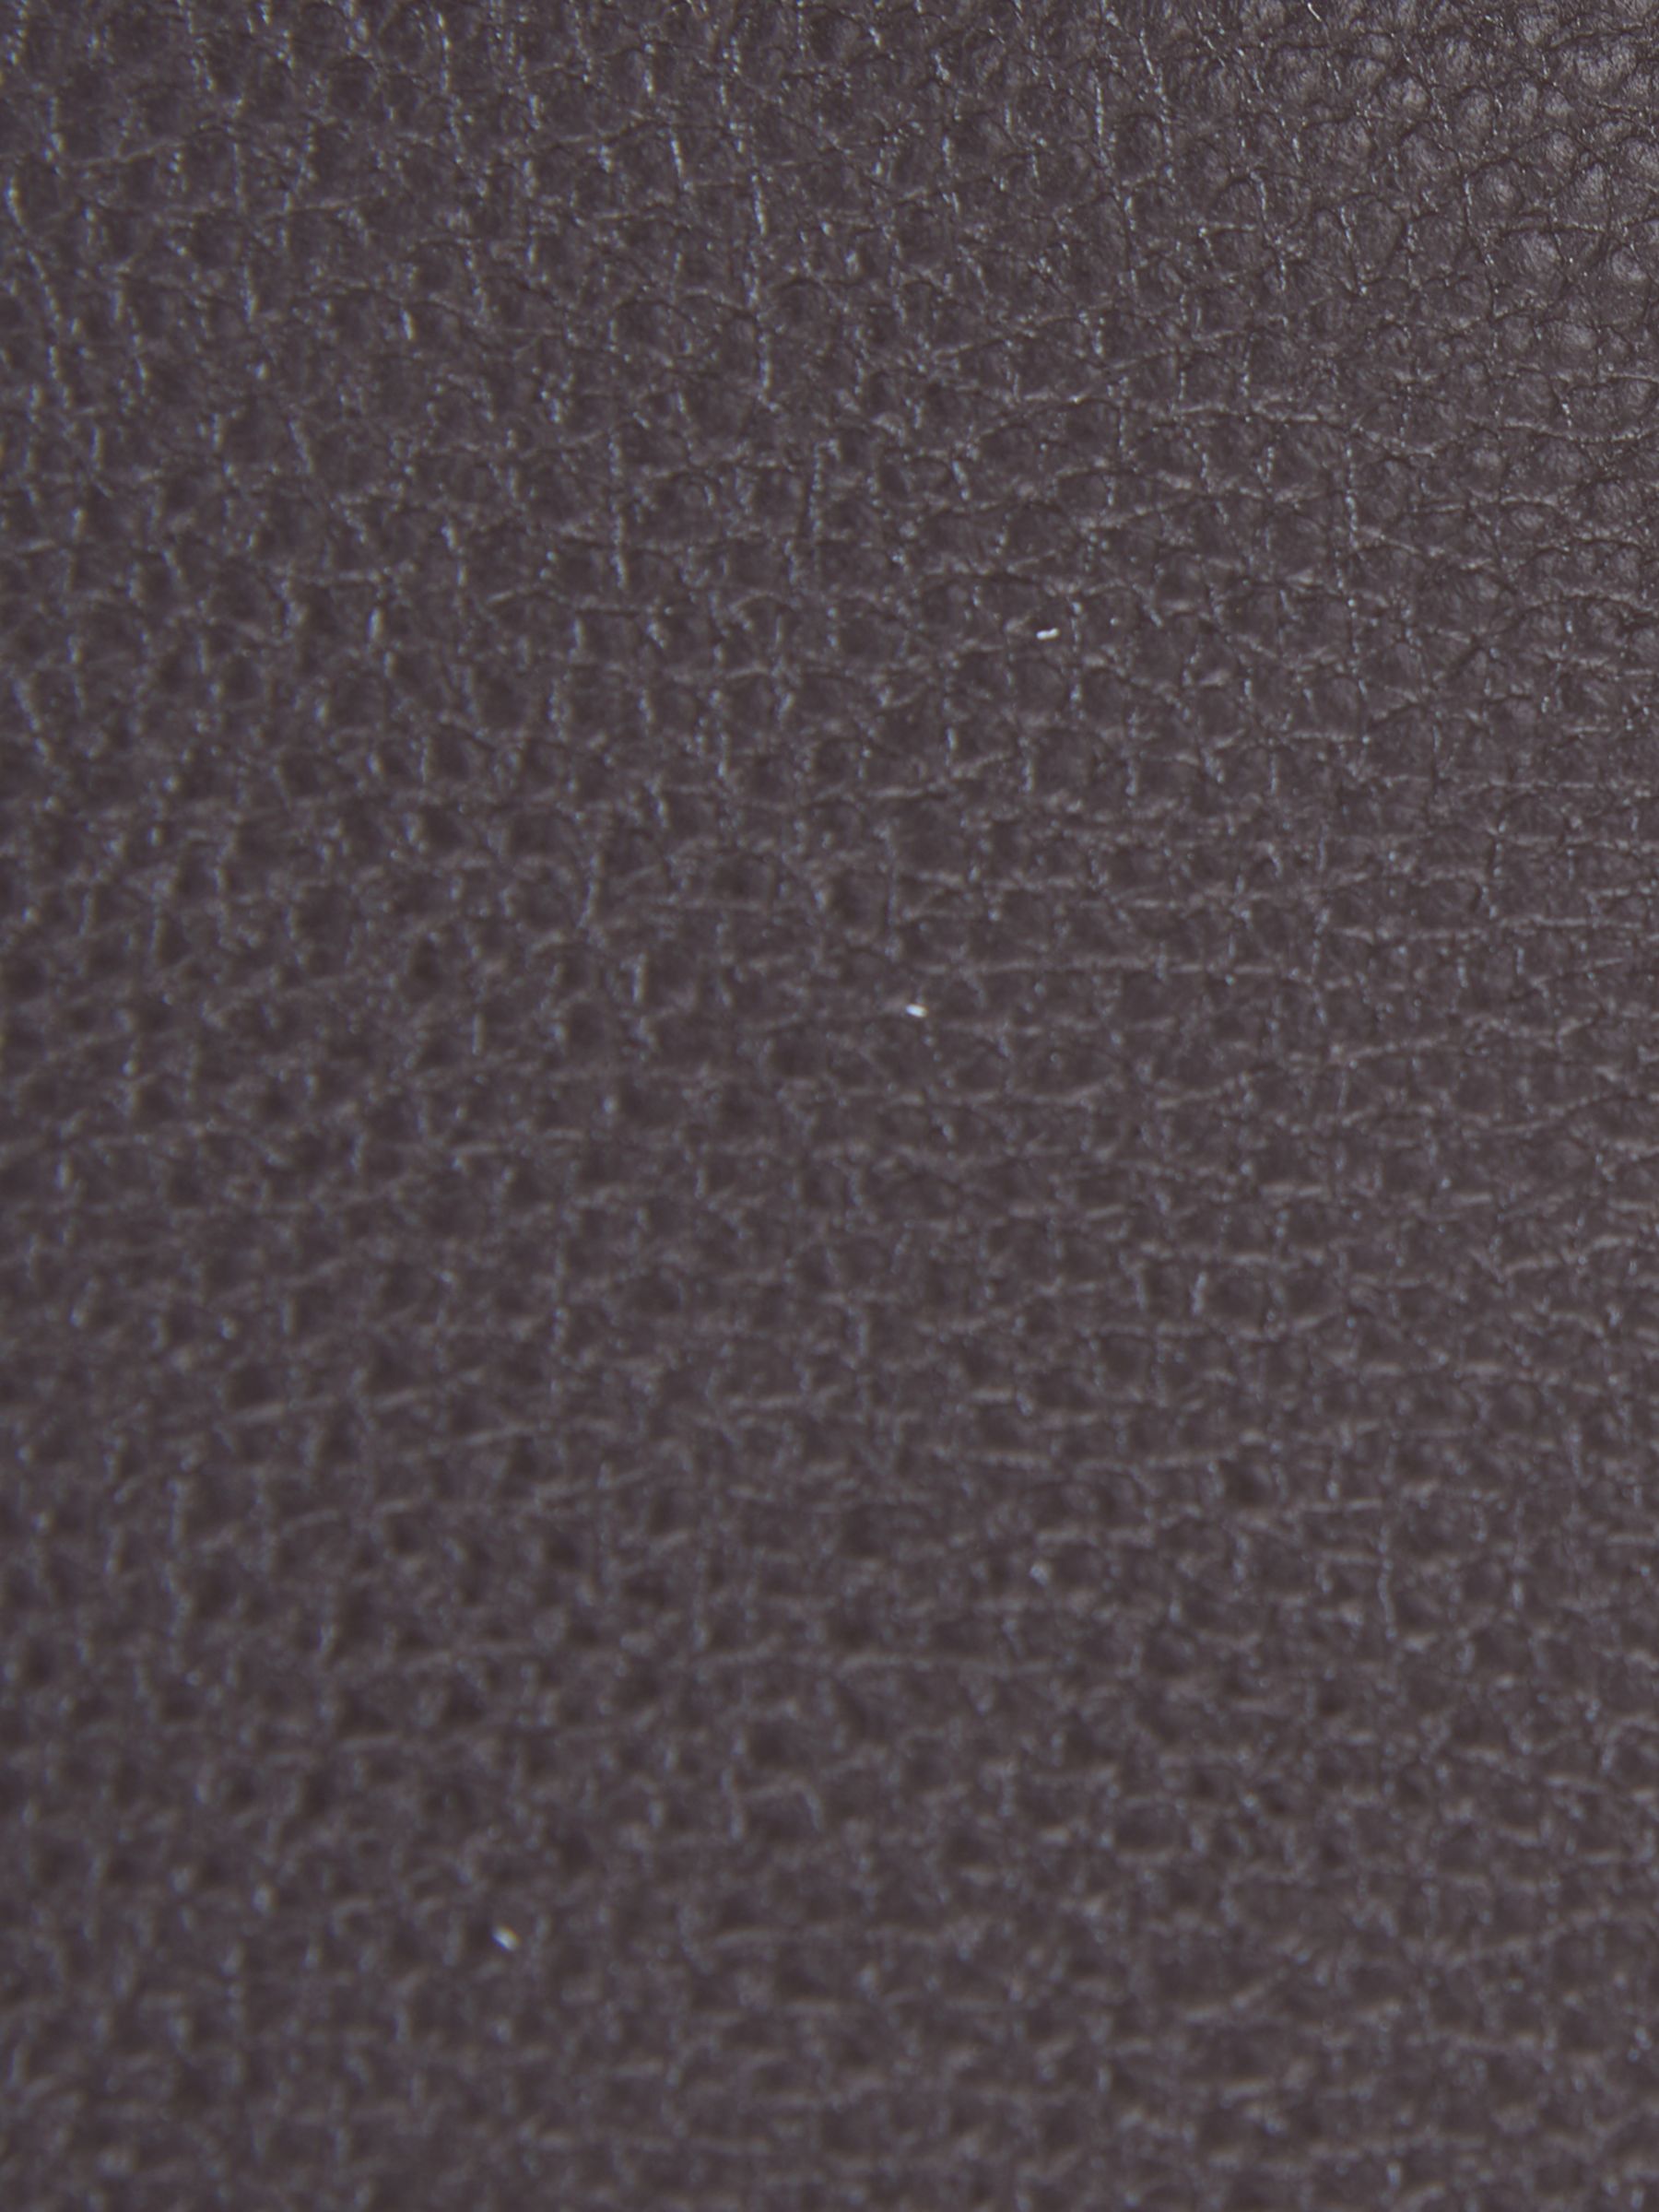 Buy Barbour Amble Leather Billfold Wallet, Dark Brown Online at johnlewis.com